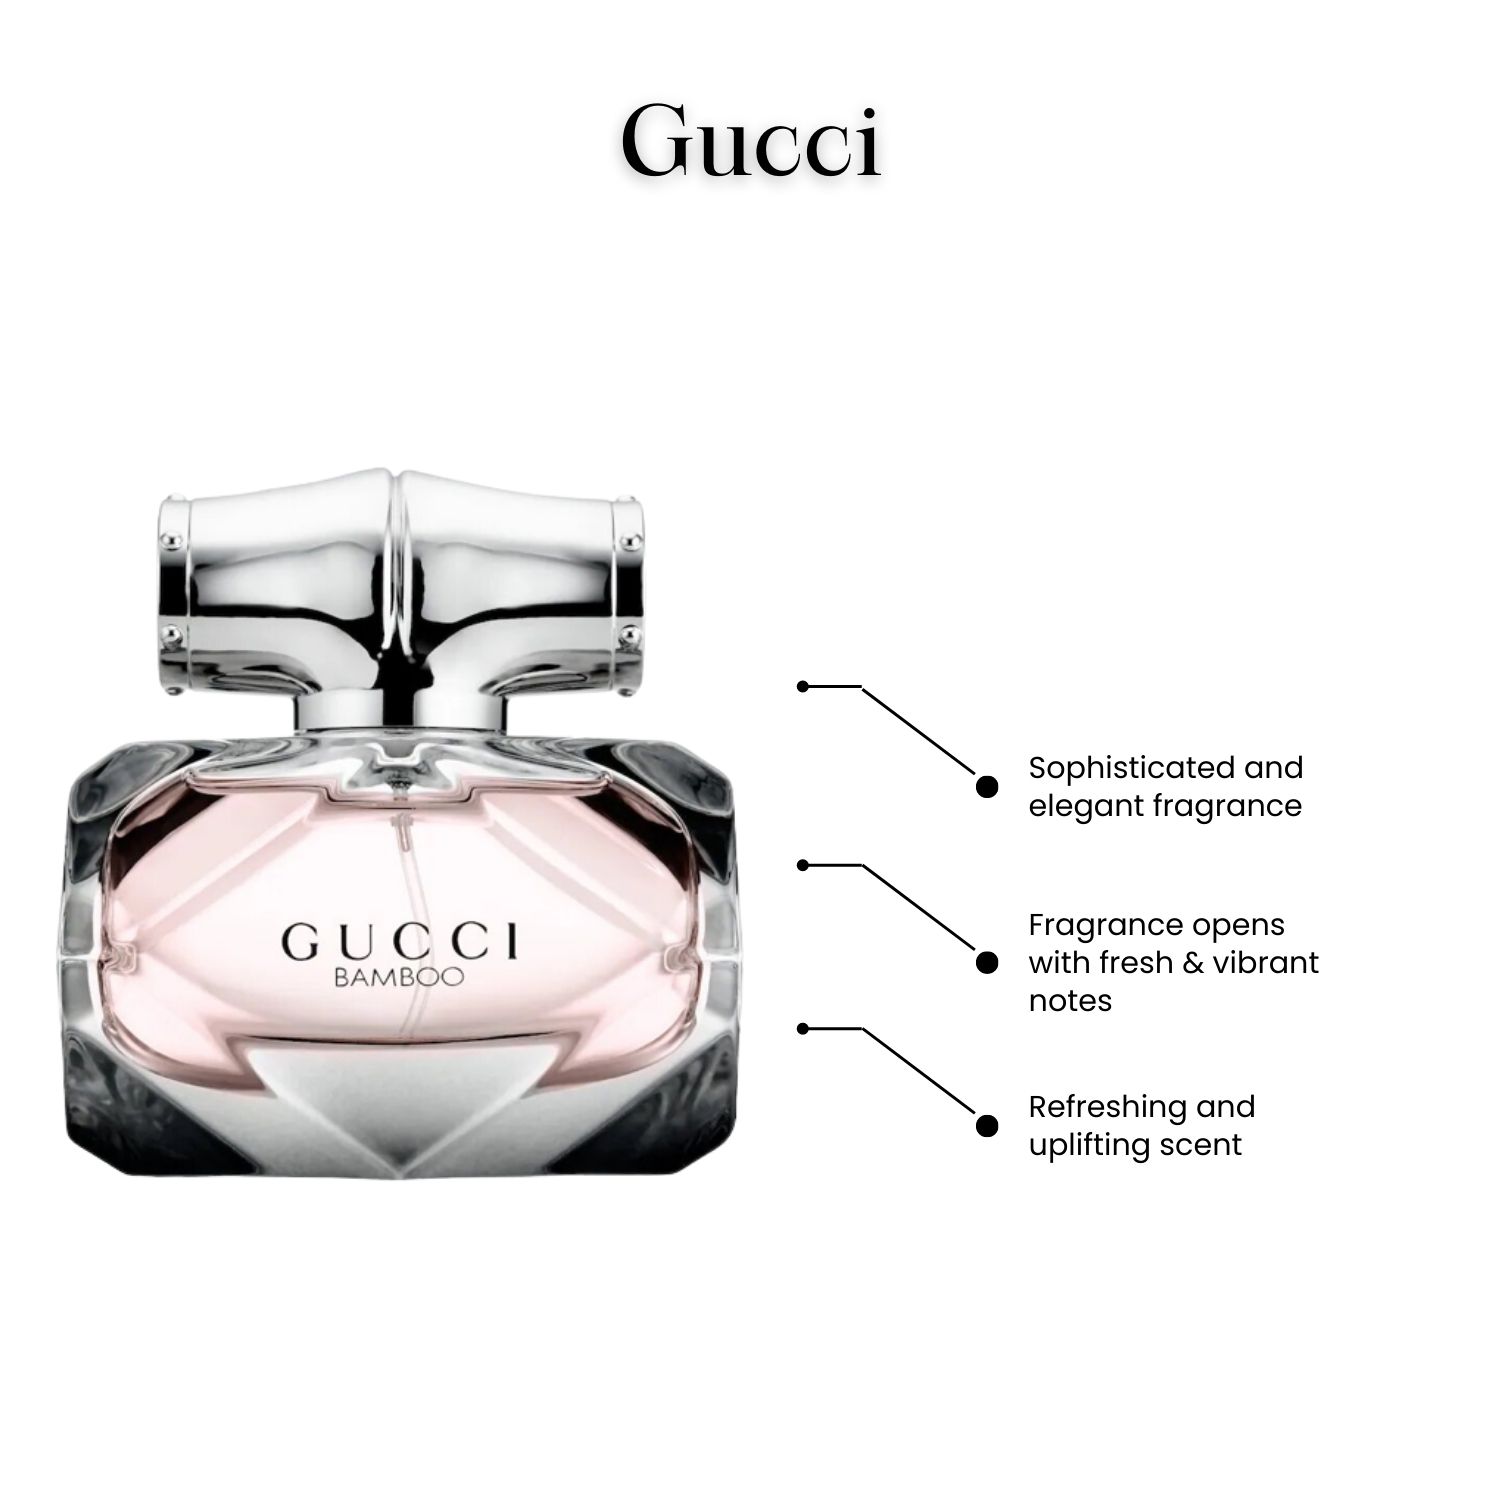 Gucci Bamboo Eau De Parfum Spray for Women 1.6 oz - image 2 of 6